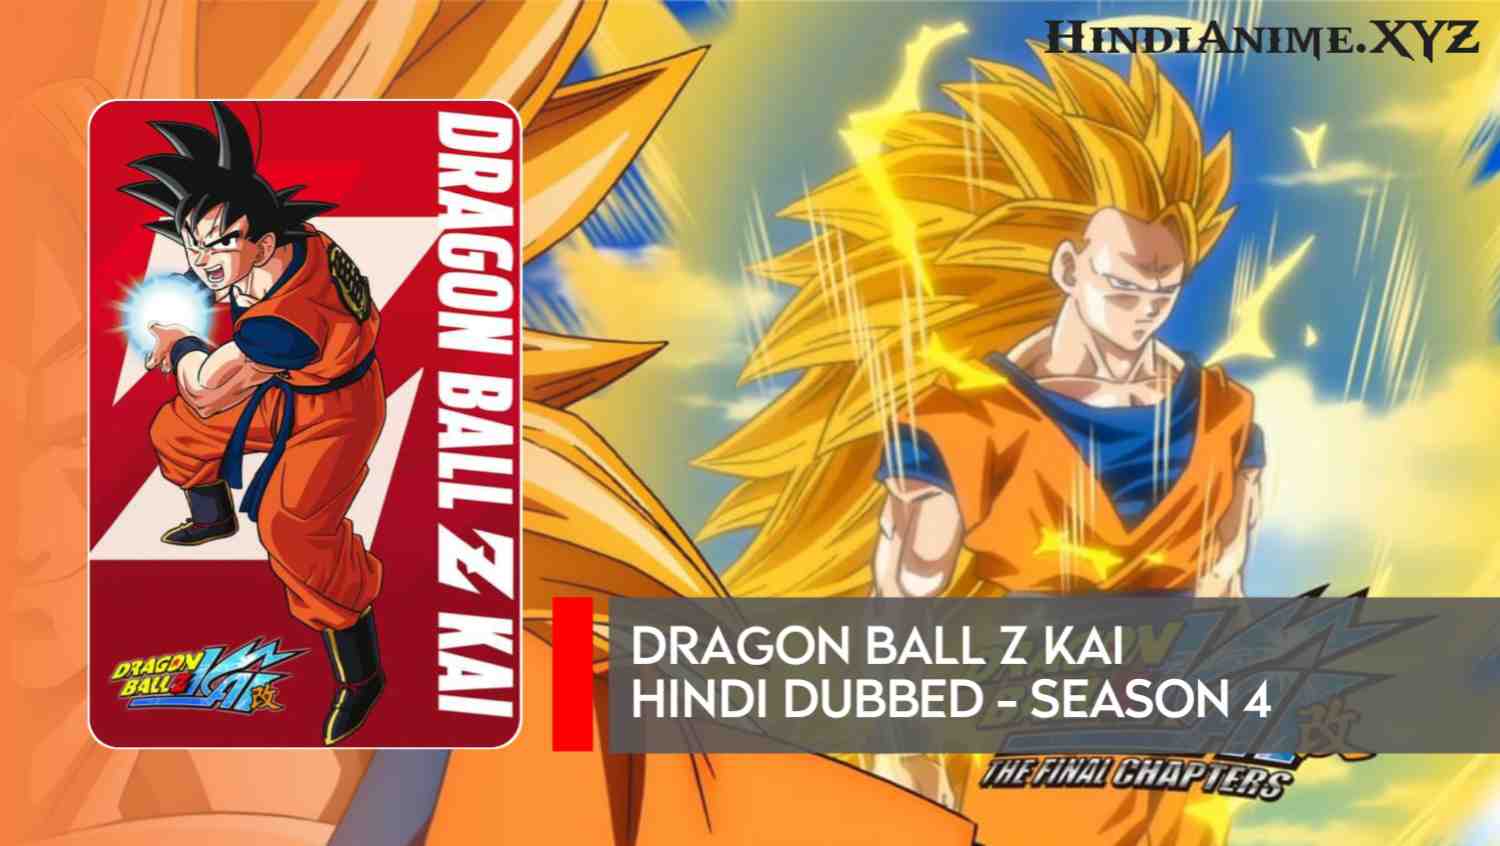 Dragon Ball Z Kai Season 4